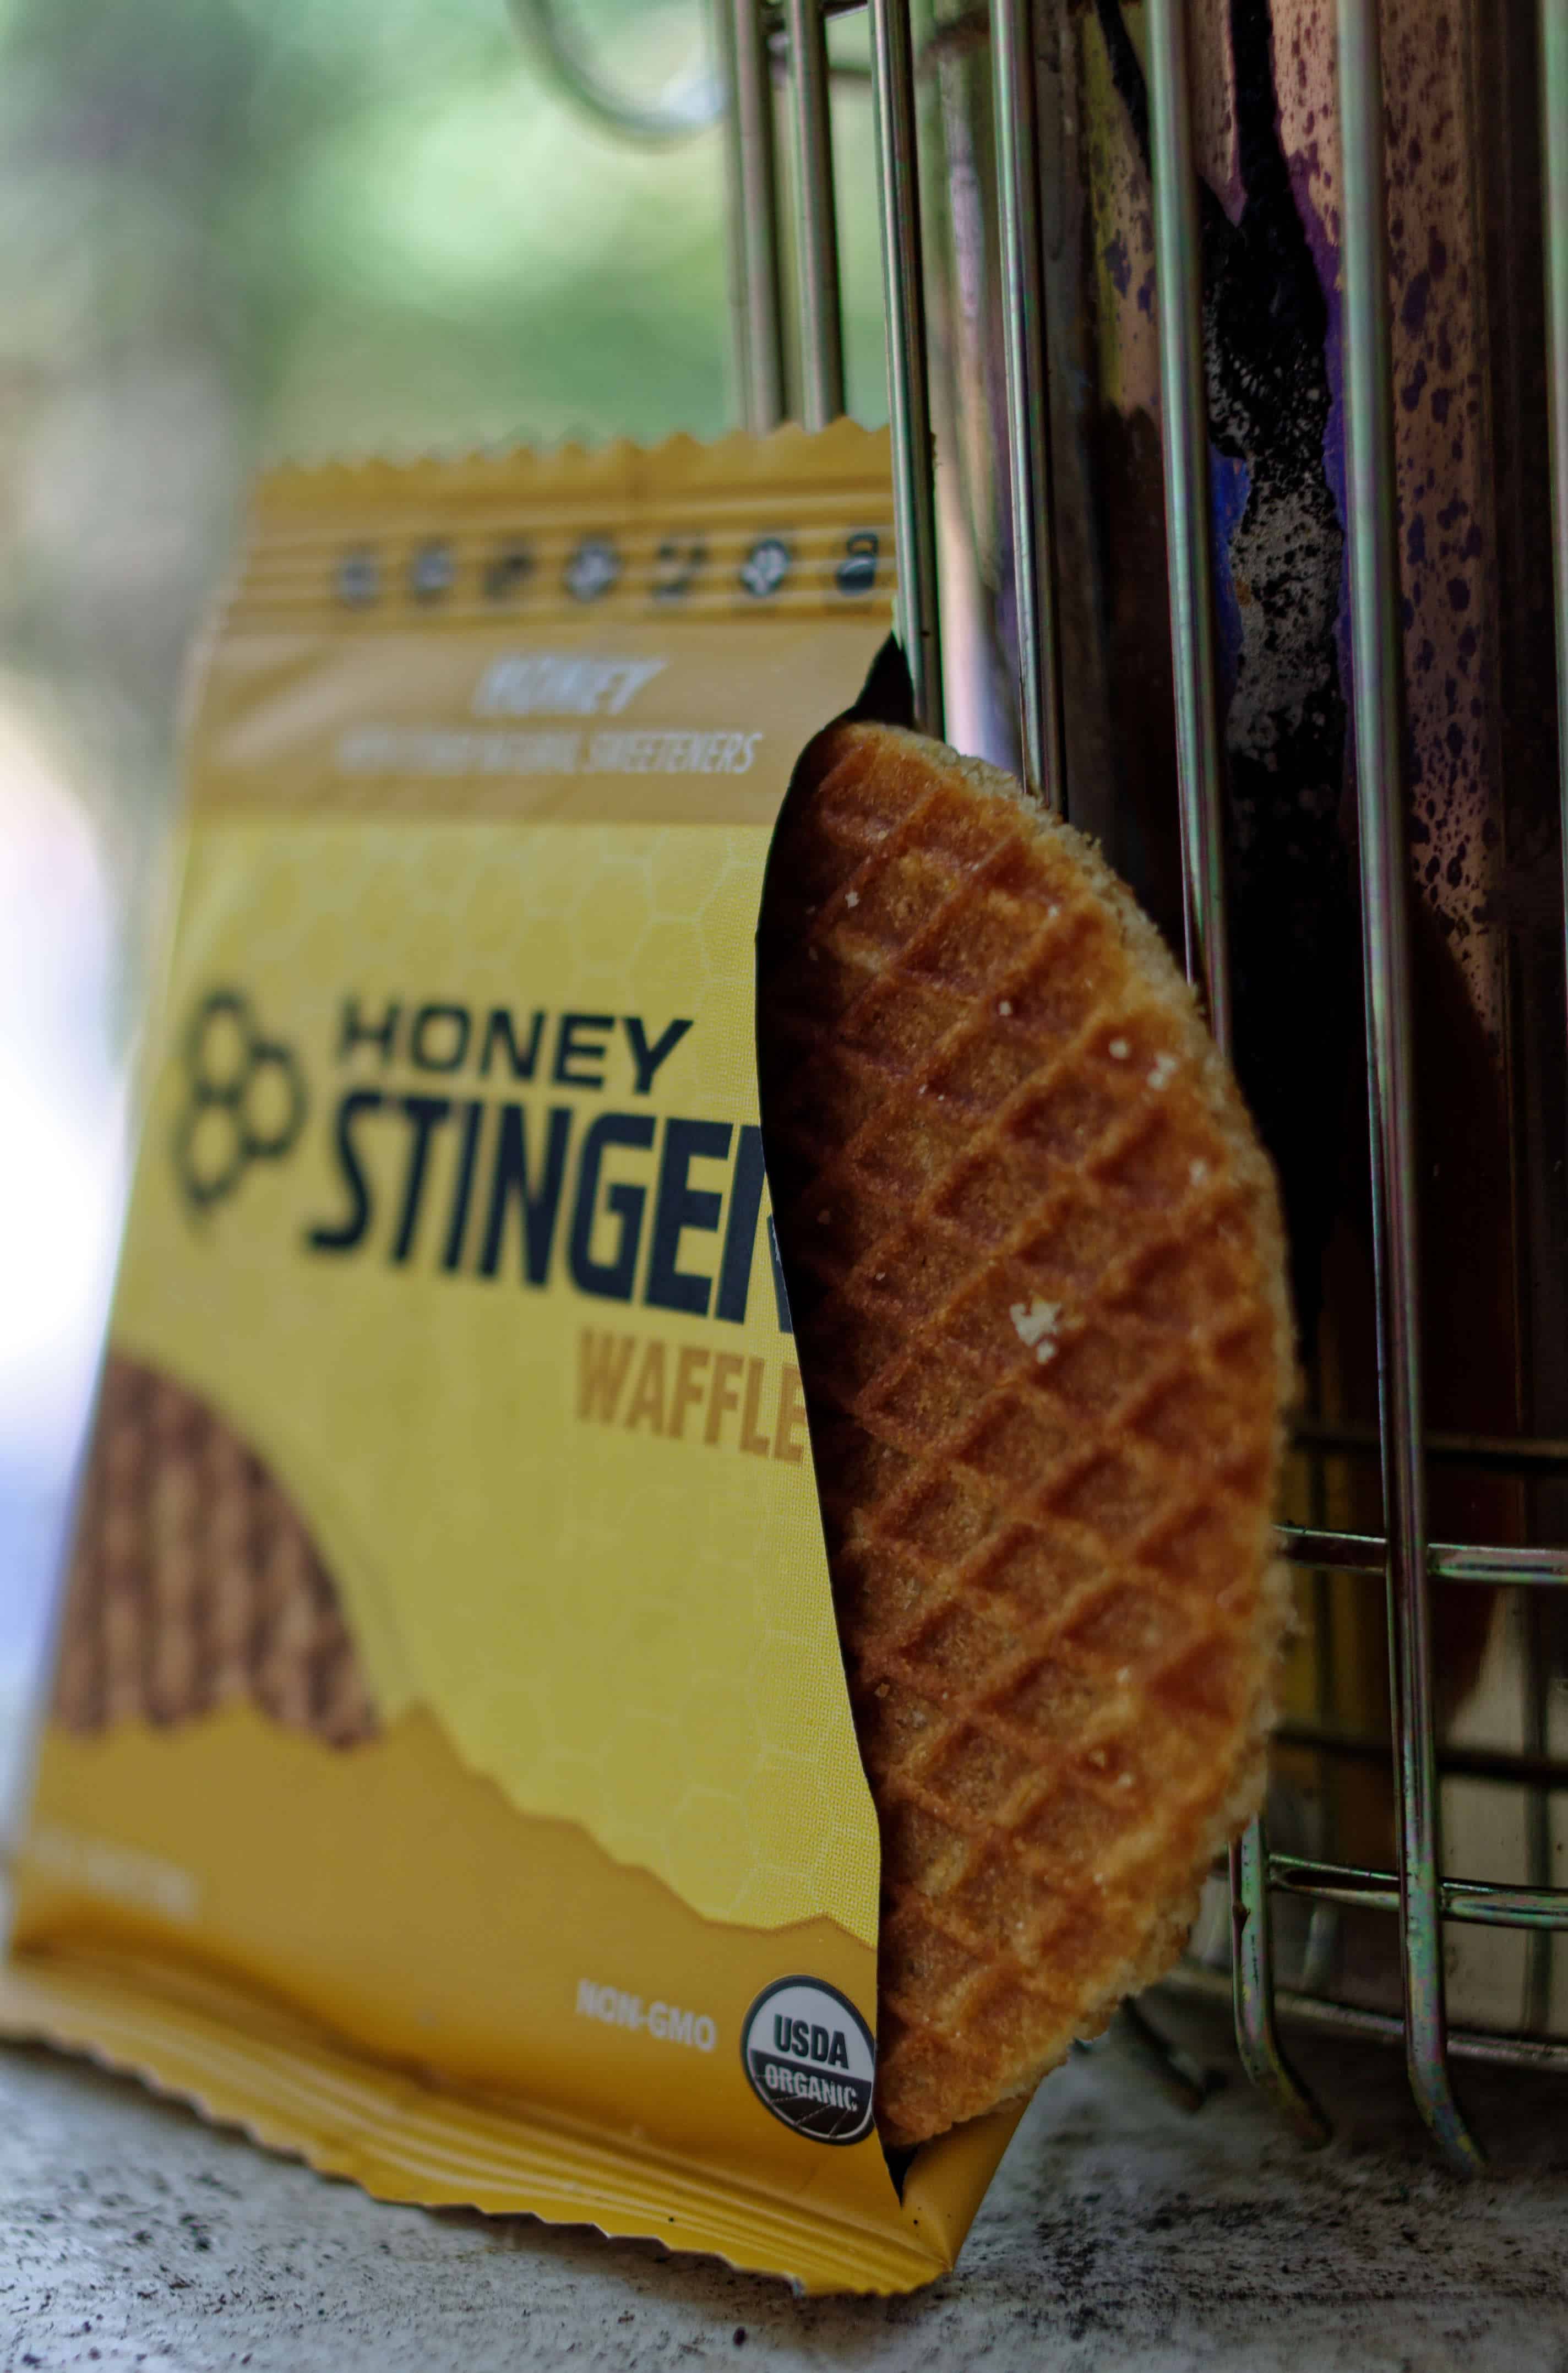 Honey Stinger Waffles with Beekeeper Smoker